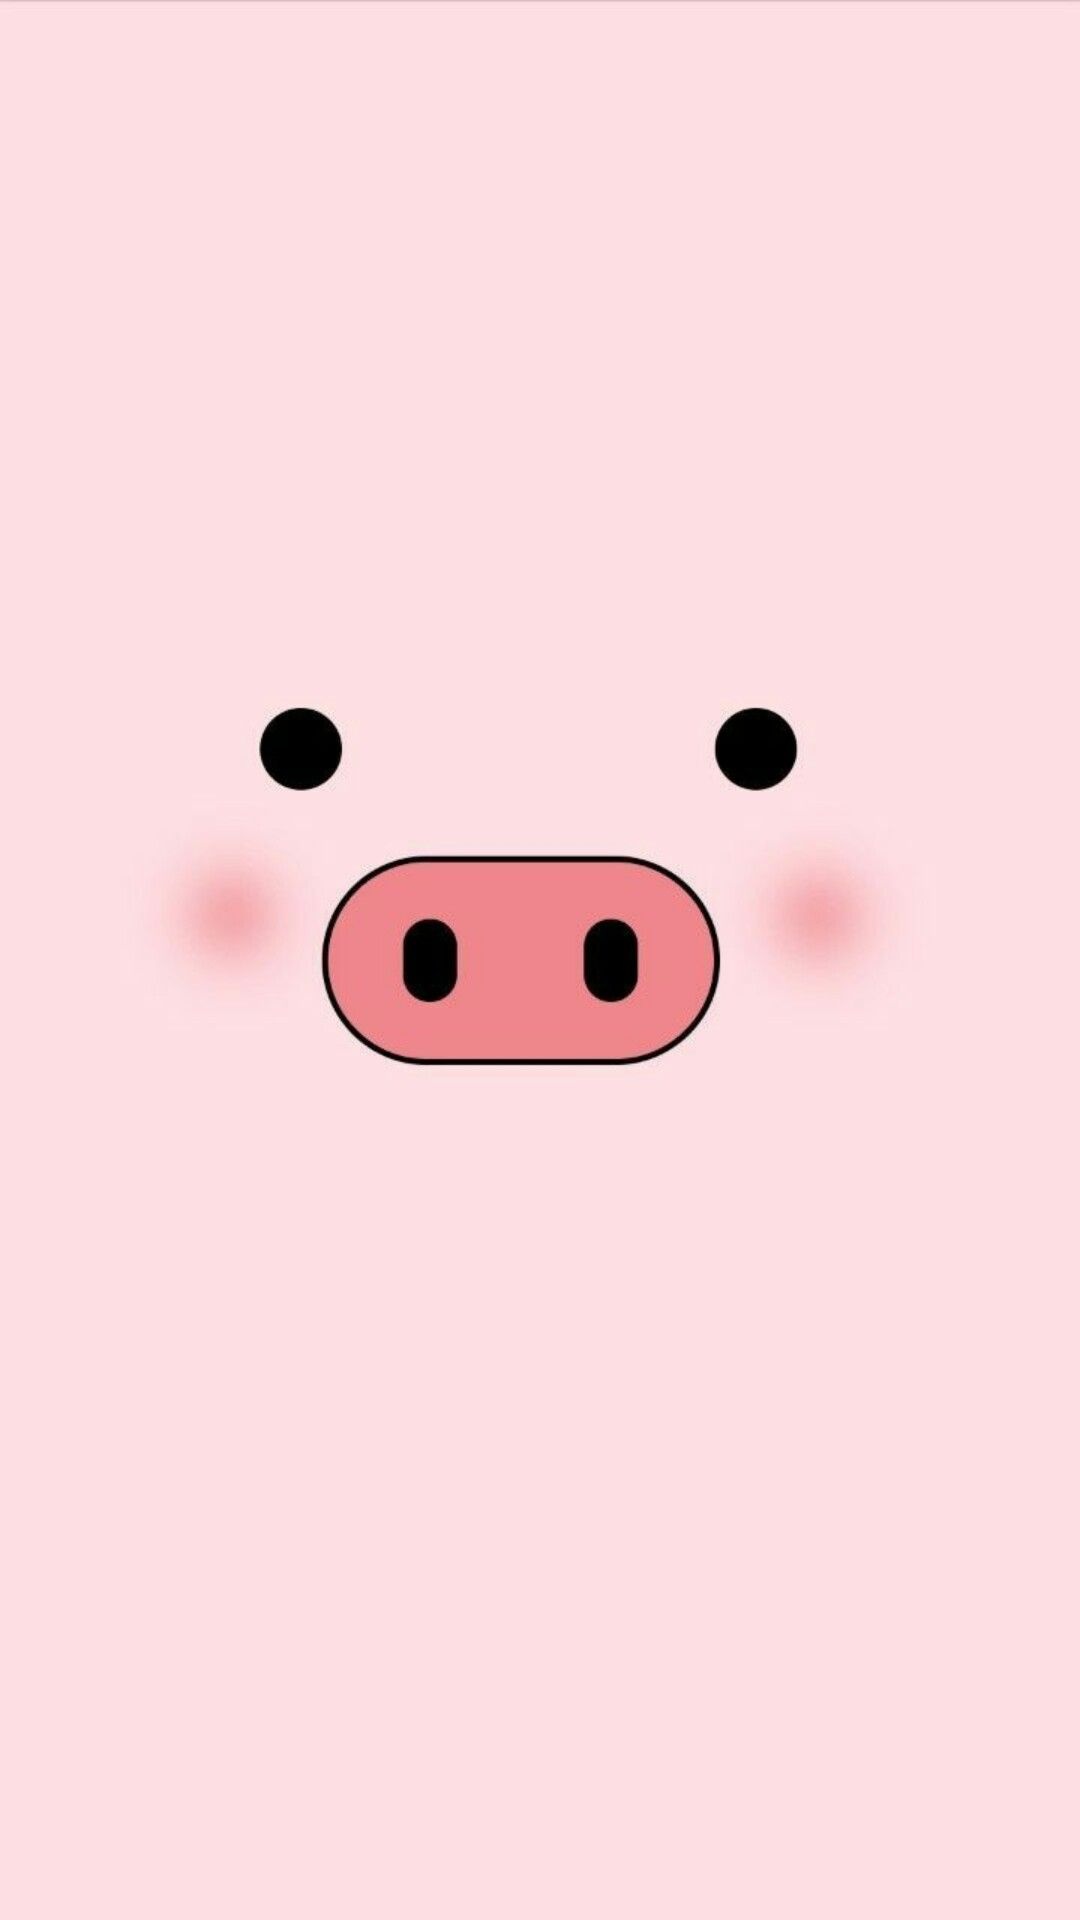 Emotive pig wallpaper, Cute emoji pig, Whimsical backgrounds, Playful snouts, 1080x1920 Full HD Phone